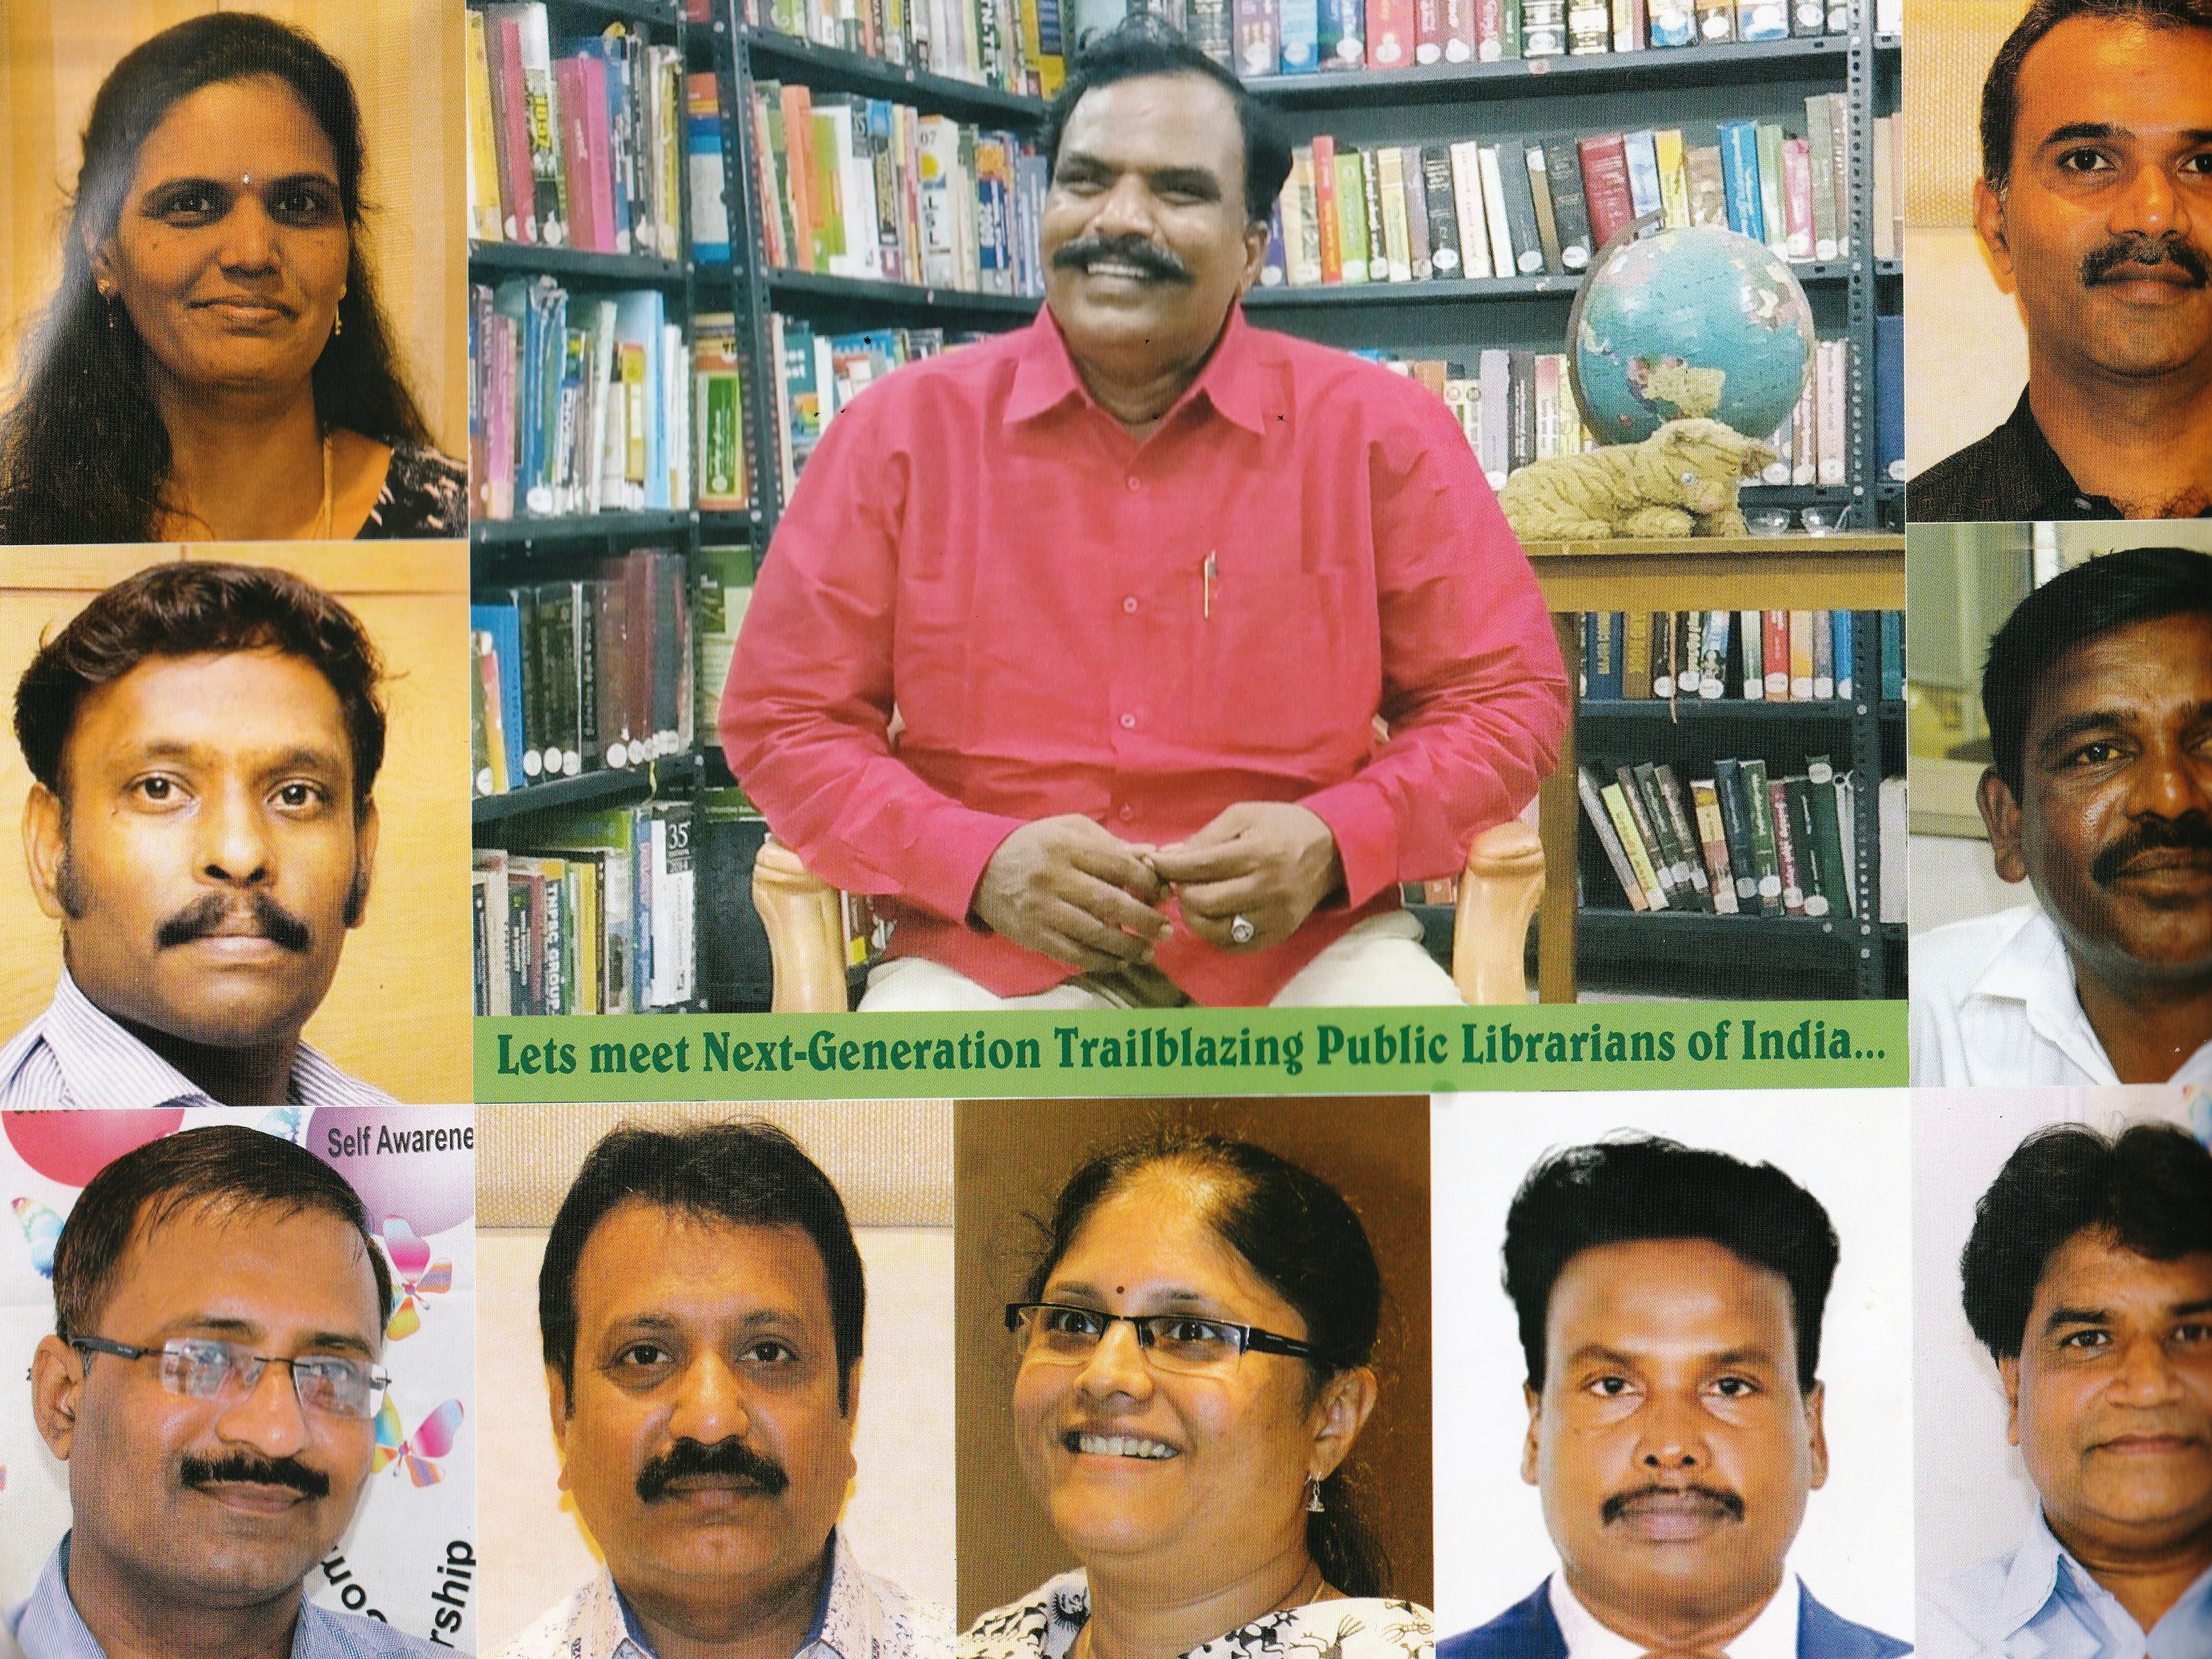 Dr. Deepak Kumar Shrivastava is among the top ten Next-Generation trailblazing public librarians of the country